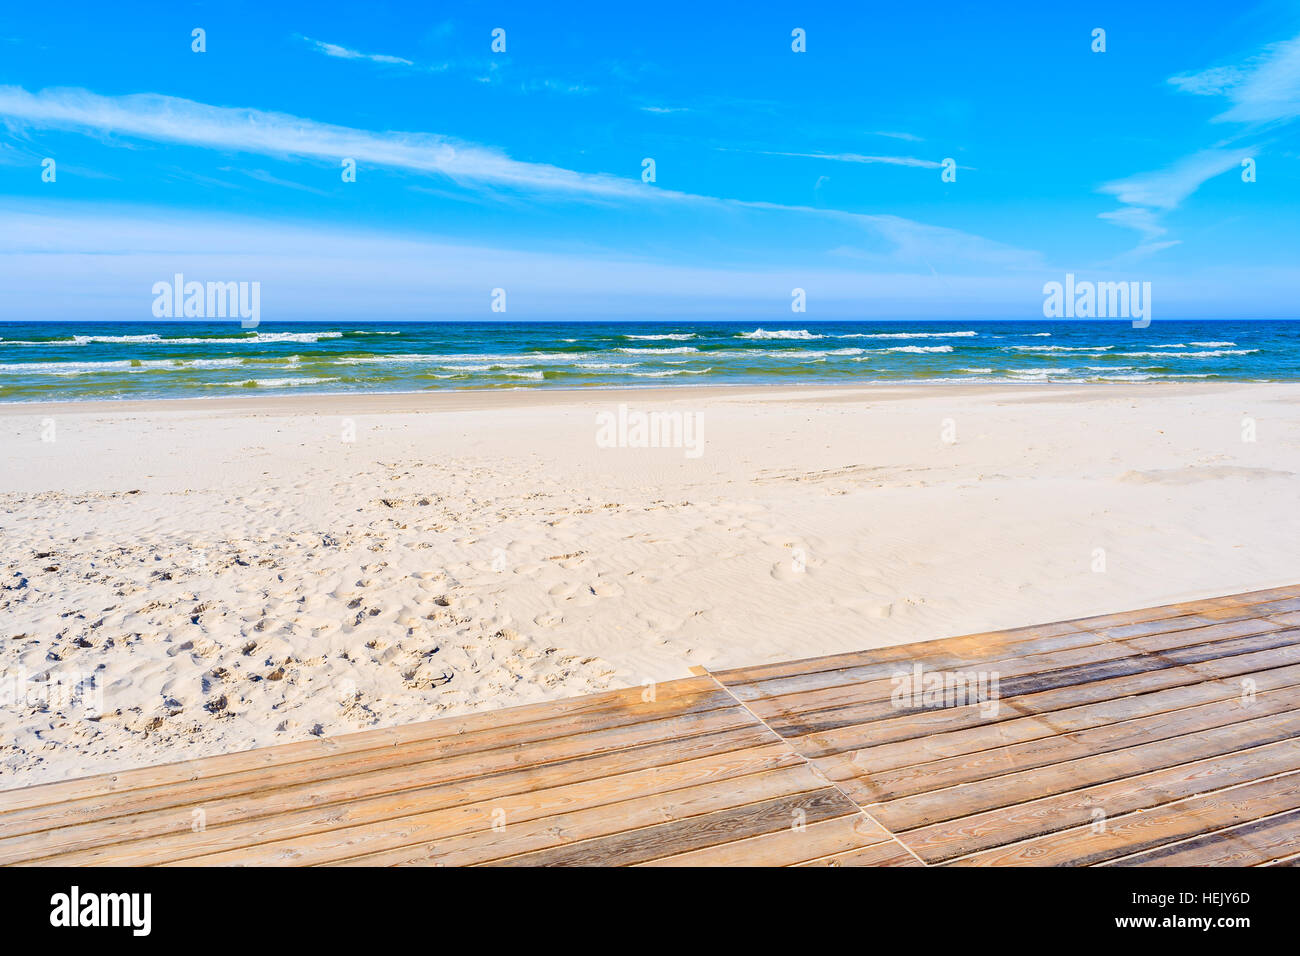 Wooden deck on sandy beach in Bialogora, Baltic Sea, Poland Stock Photo